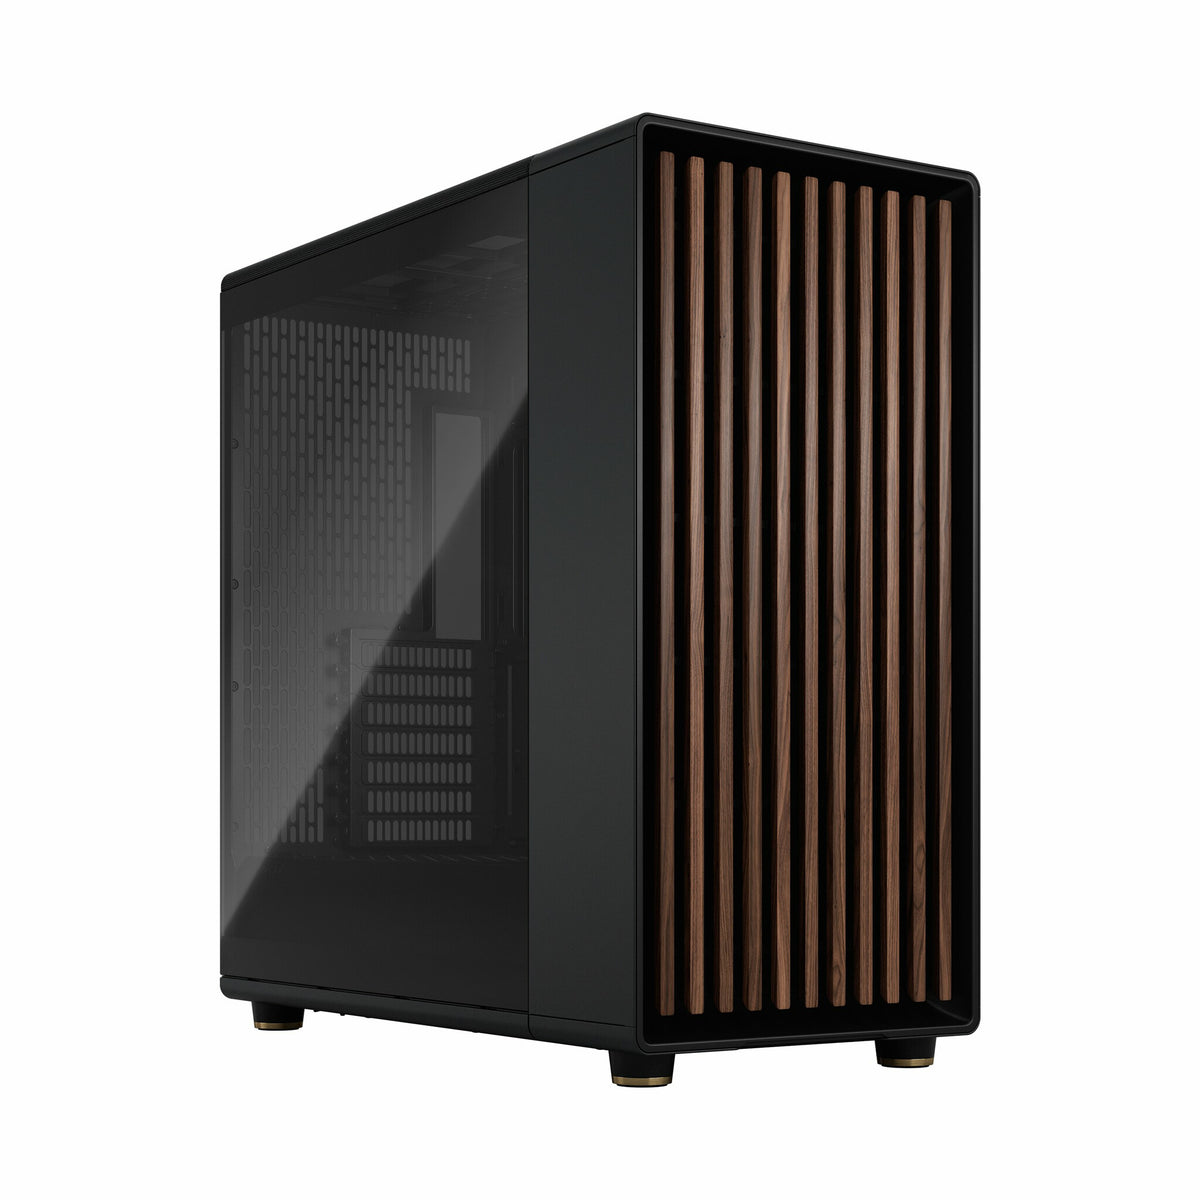 Fractal Design North XL - ATX Full Tower Case in Black